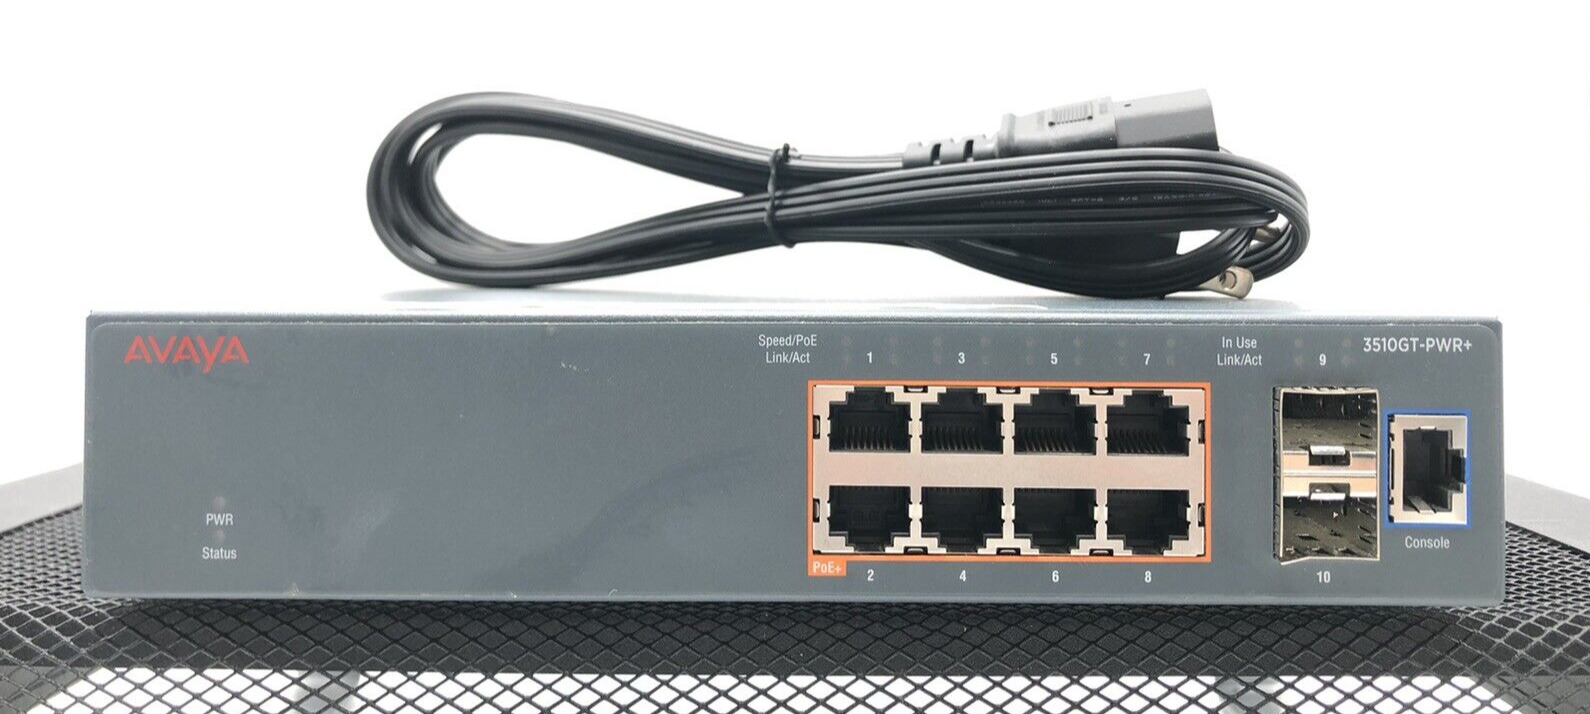 Avaya ERS 3510GT-PWR+ Ethernet Routing Switch AL3500A14-E6